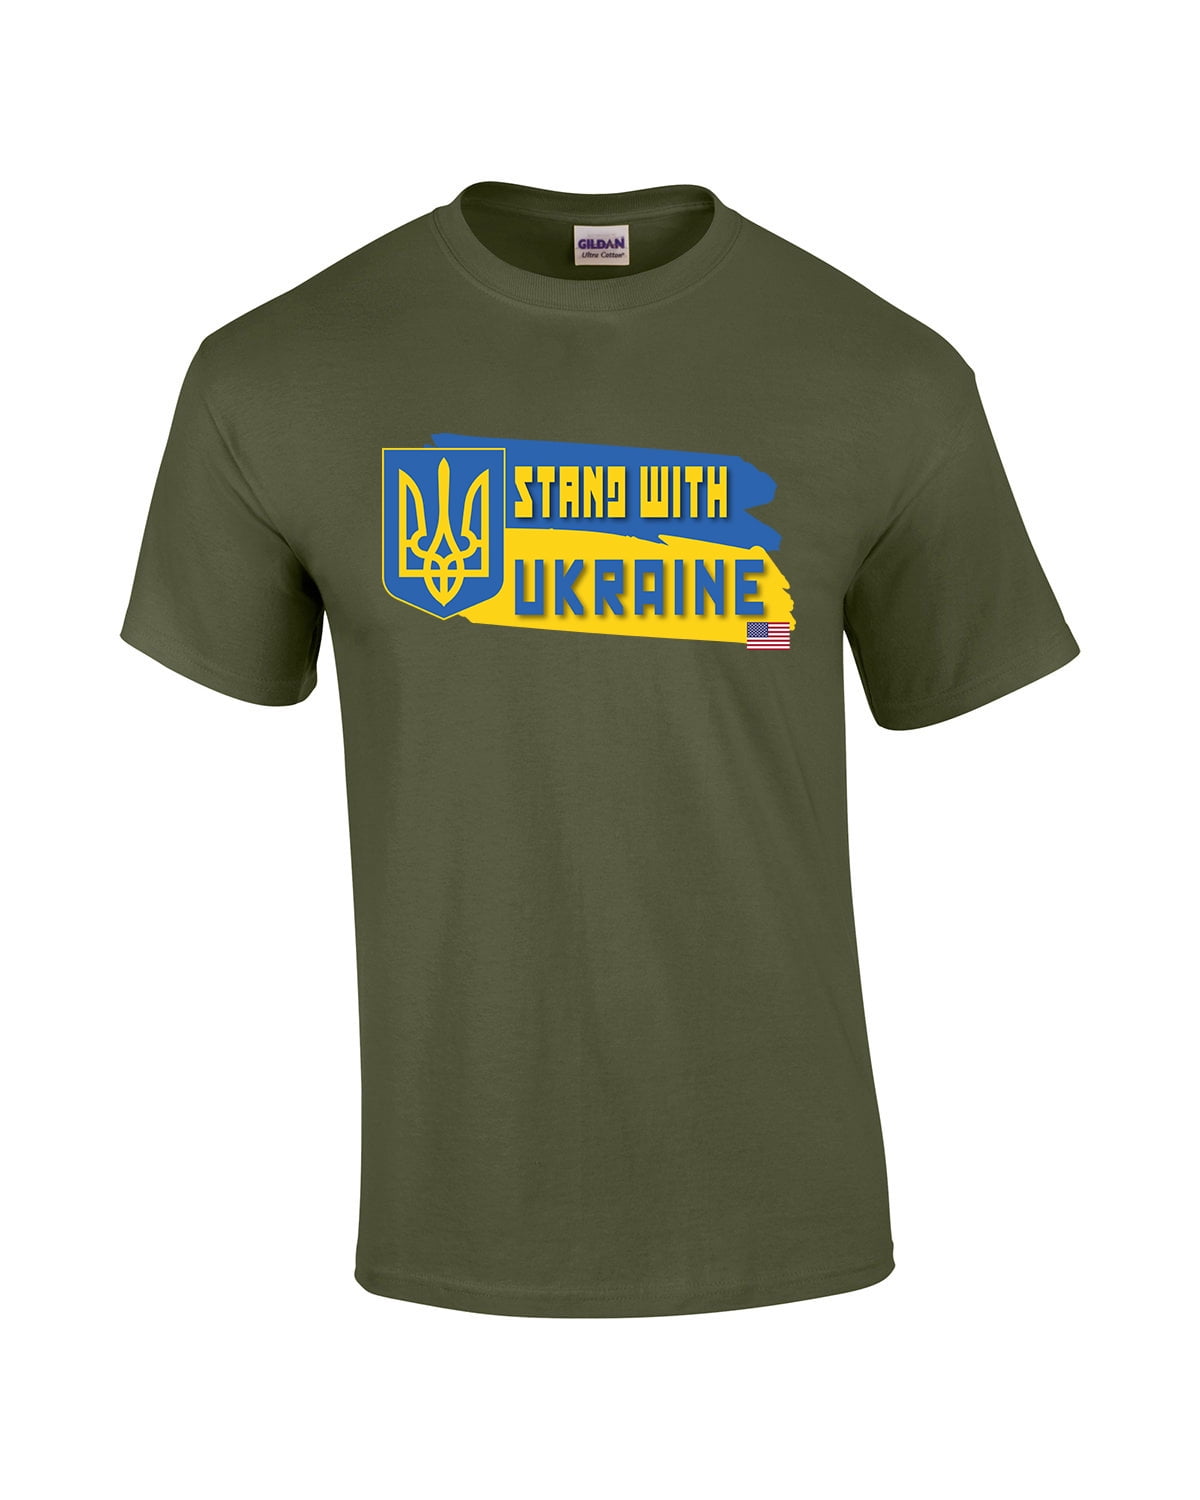 Men's Football Game Shirt team of Ukraine Sport Ukrainian shirts Gift for Him Football Shirt T-shirt national team game shirt of Ukraine